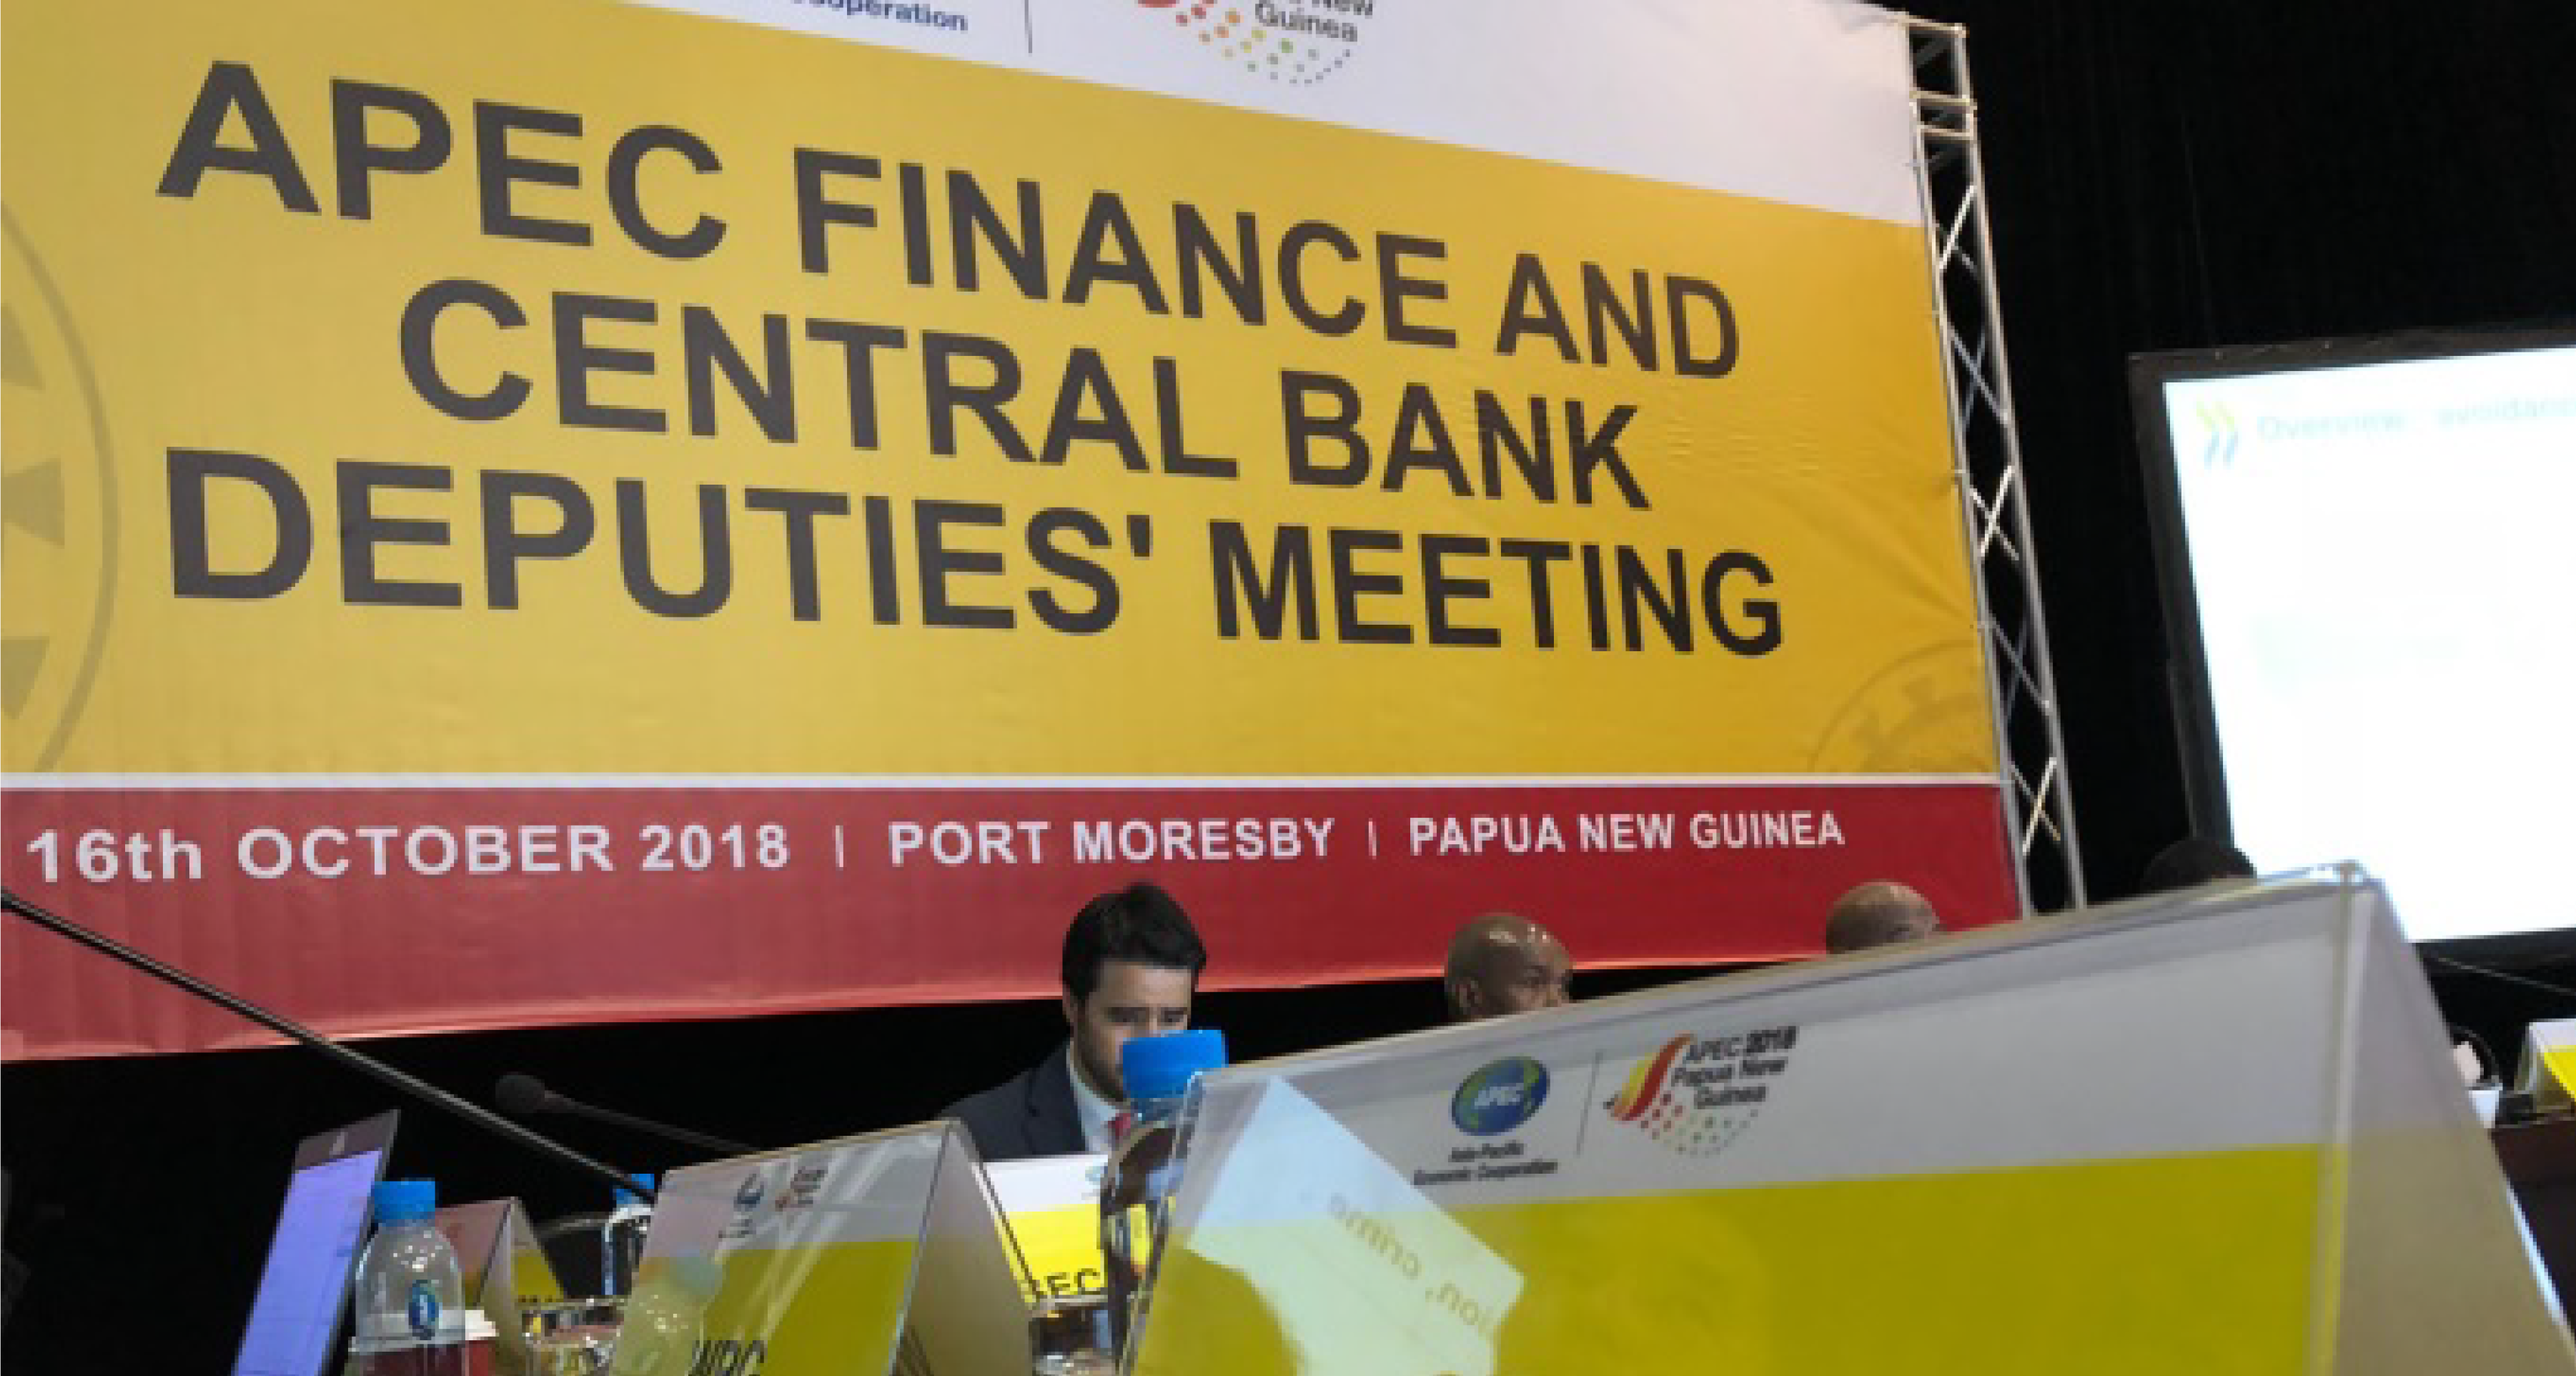 APEC Finance and Central Bank Deputies Meeting